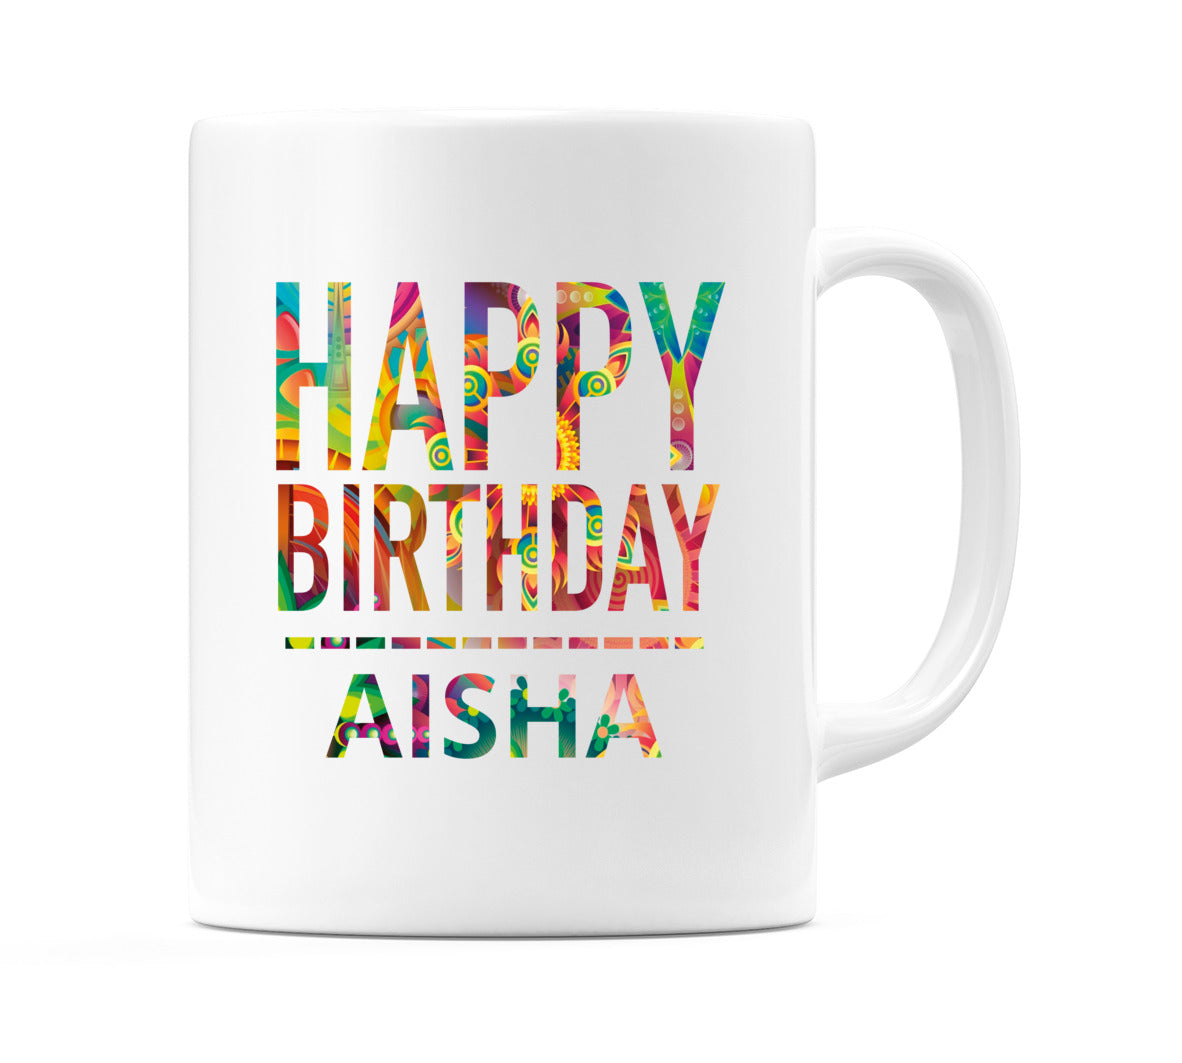 Happy Birthday Aisha (Tie Dye Effect) Mug Cup by WeDoMugs